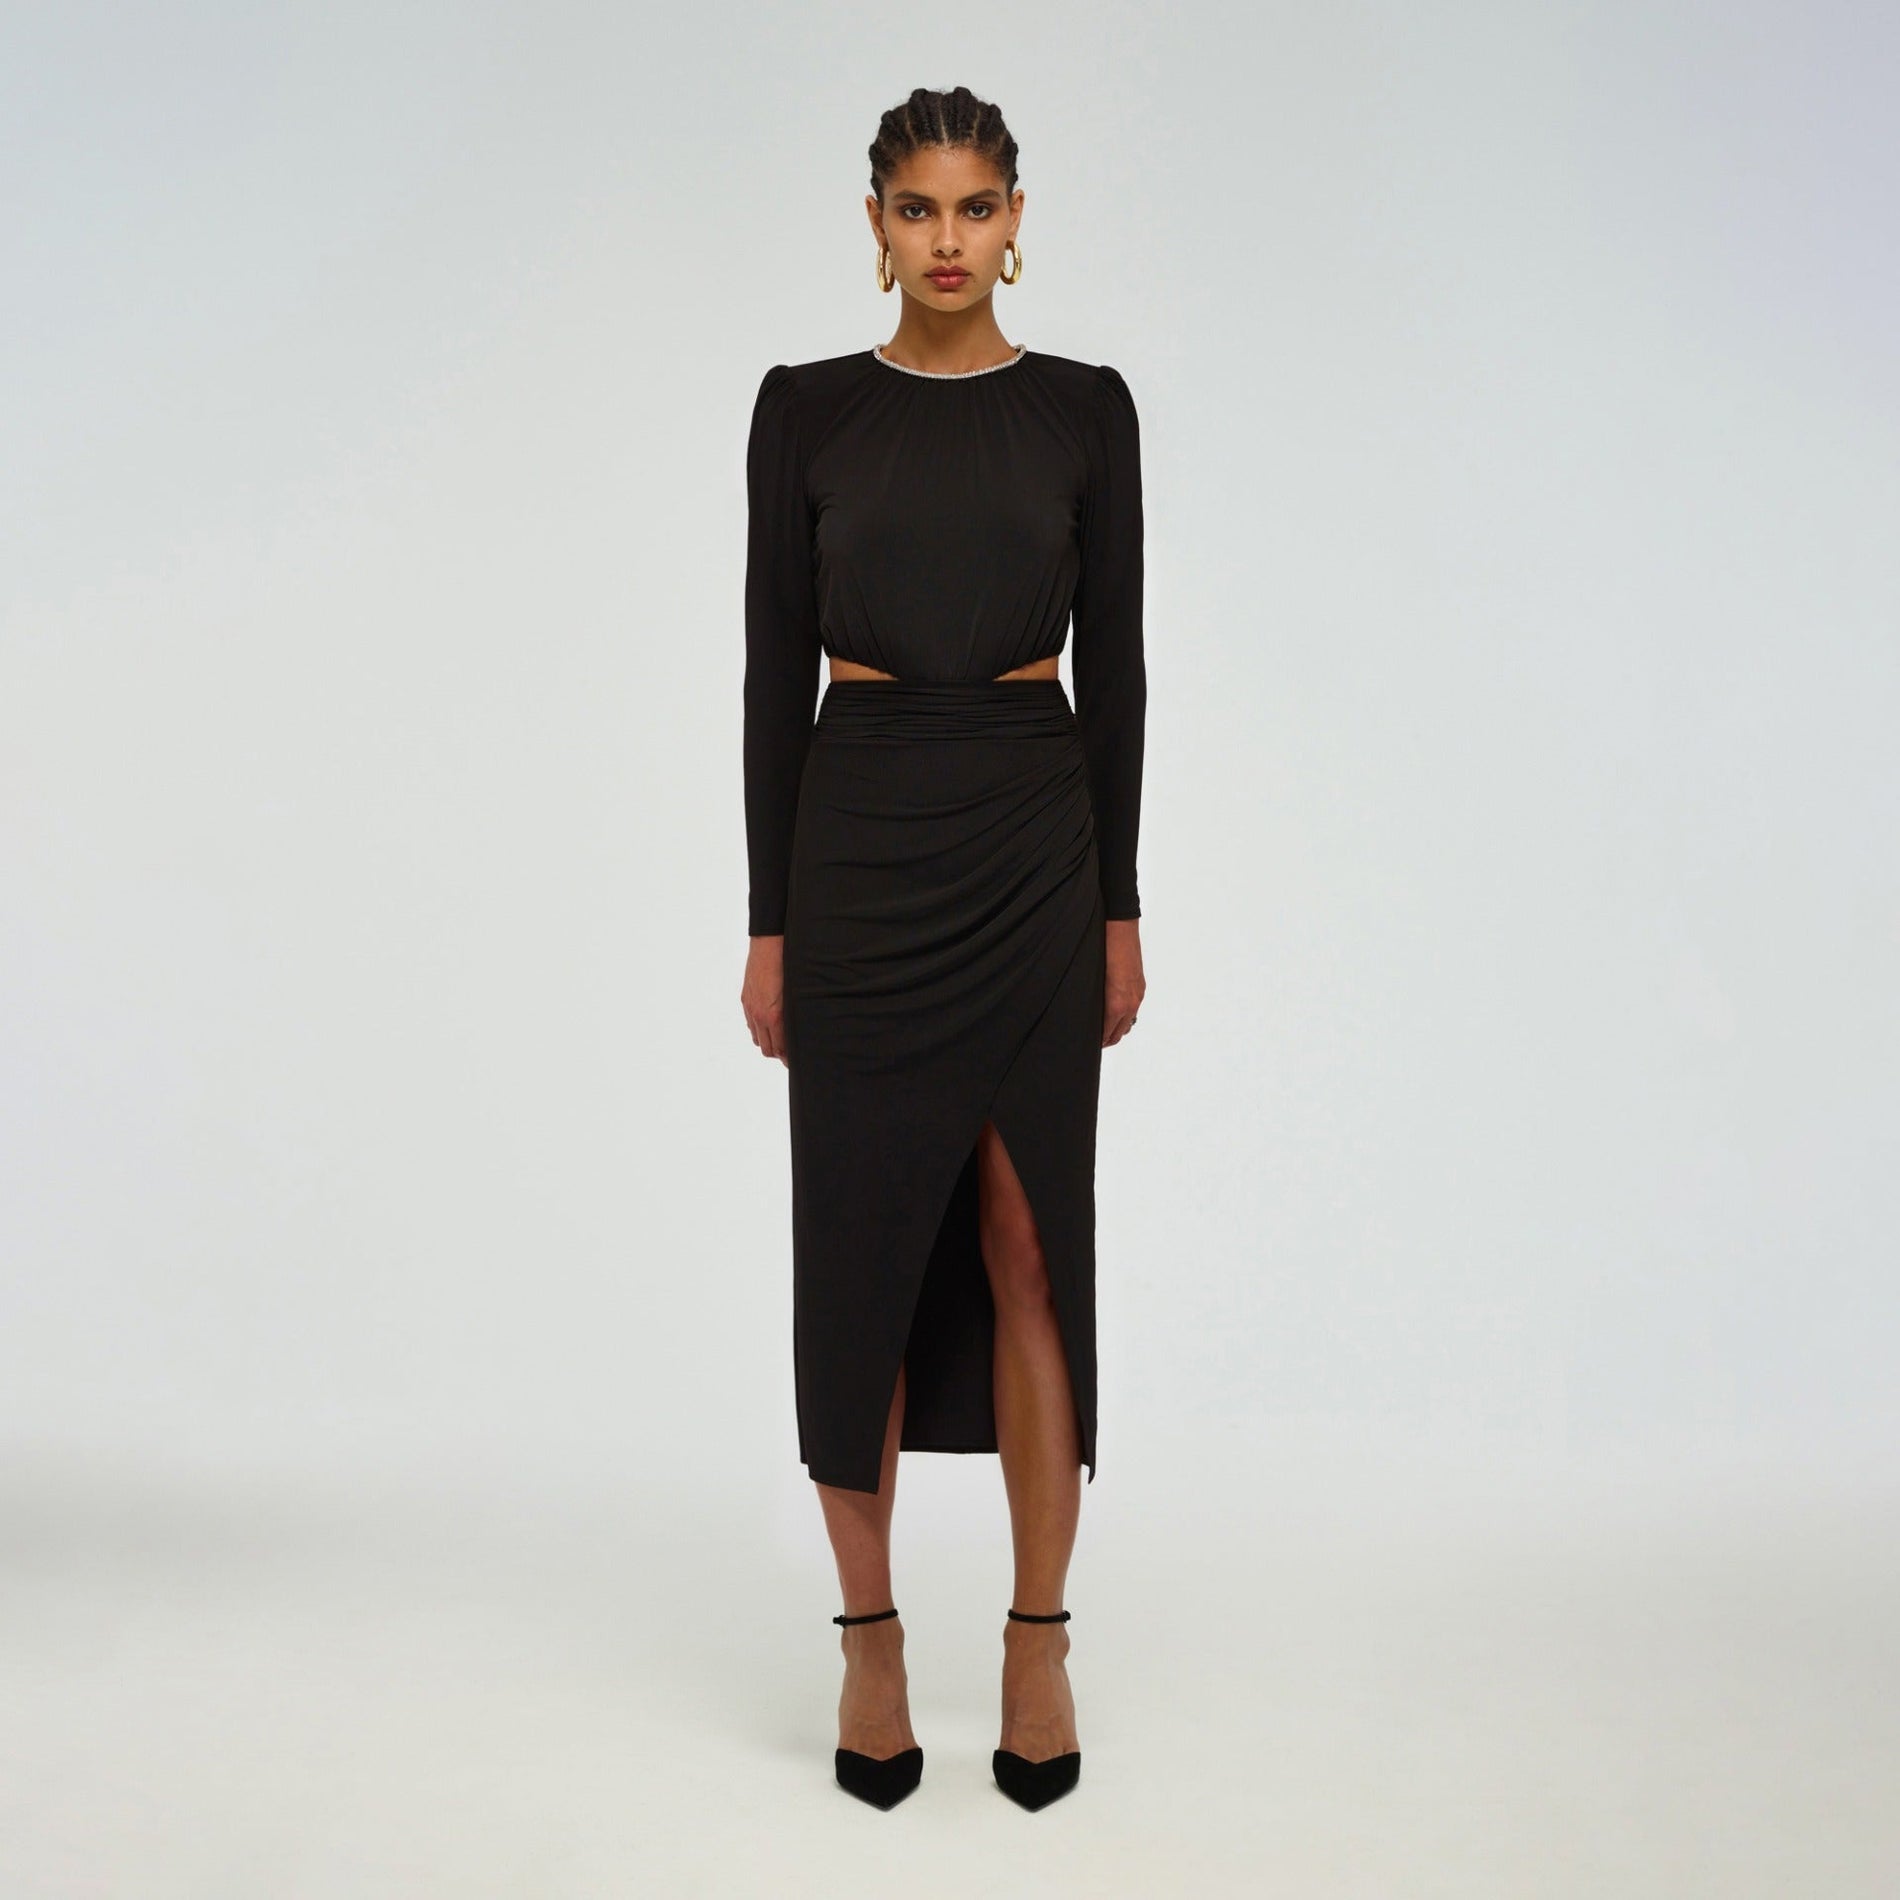 A woman wearing the Black Cut Out Midi Dress